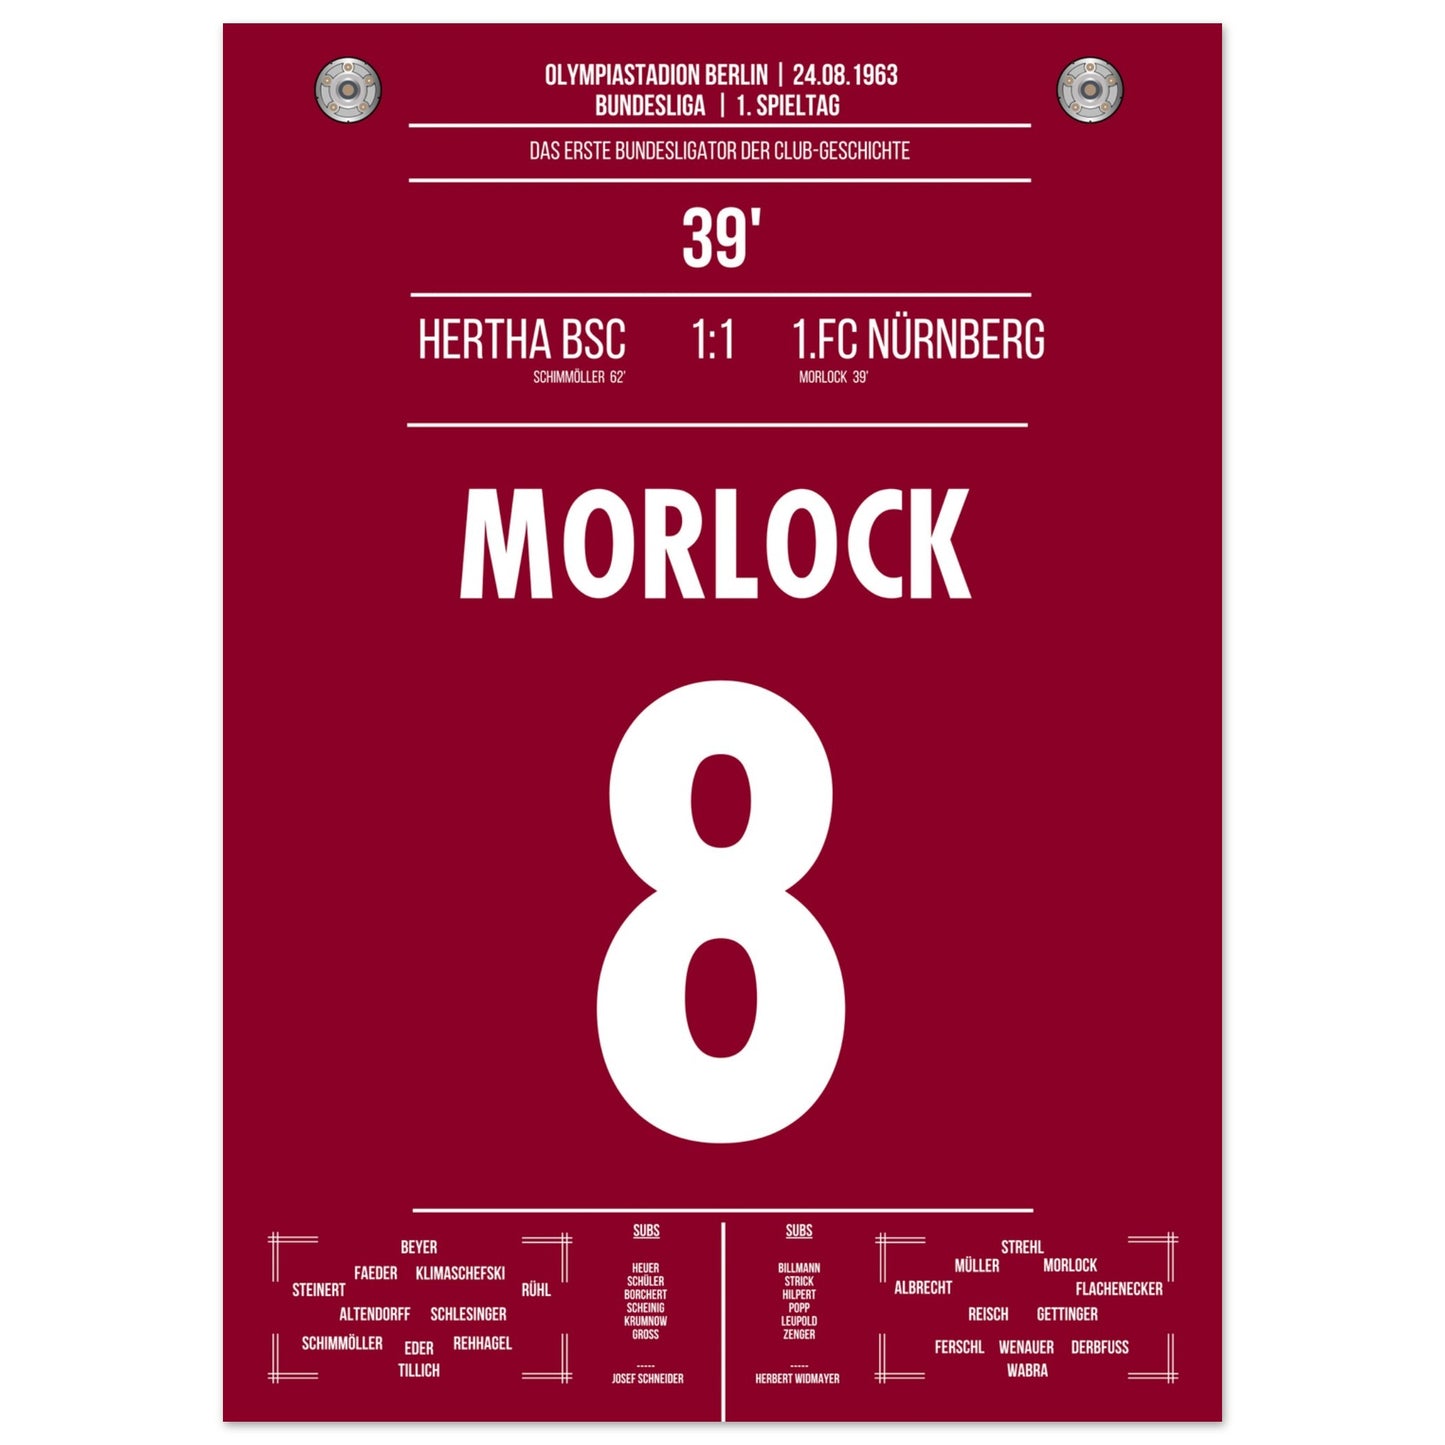 Morlock erzielt das erste Bundesliga-Tor des FCN in 1963